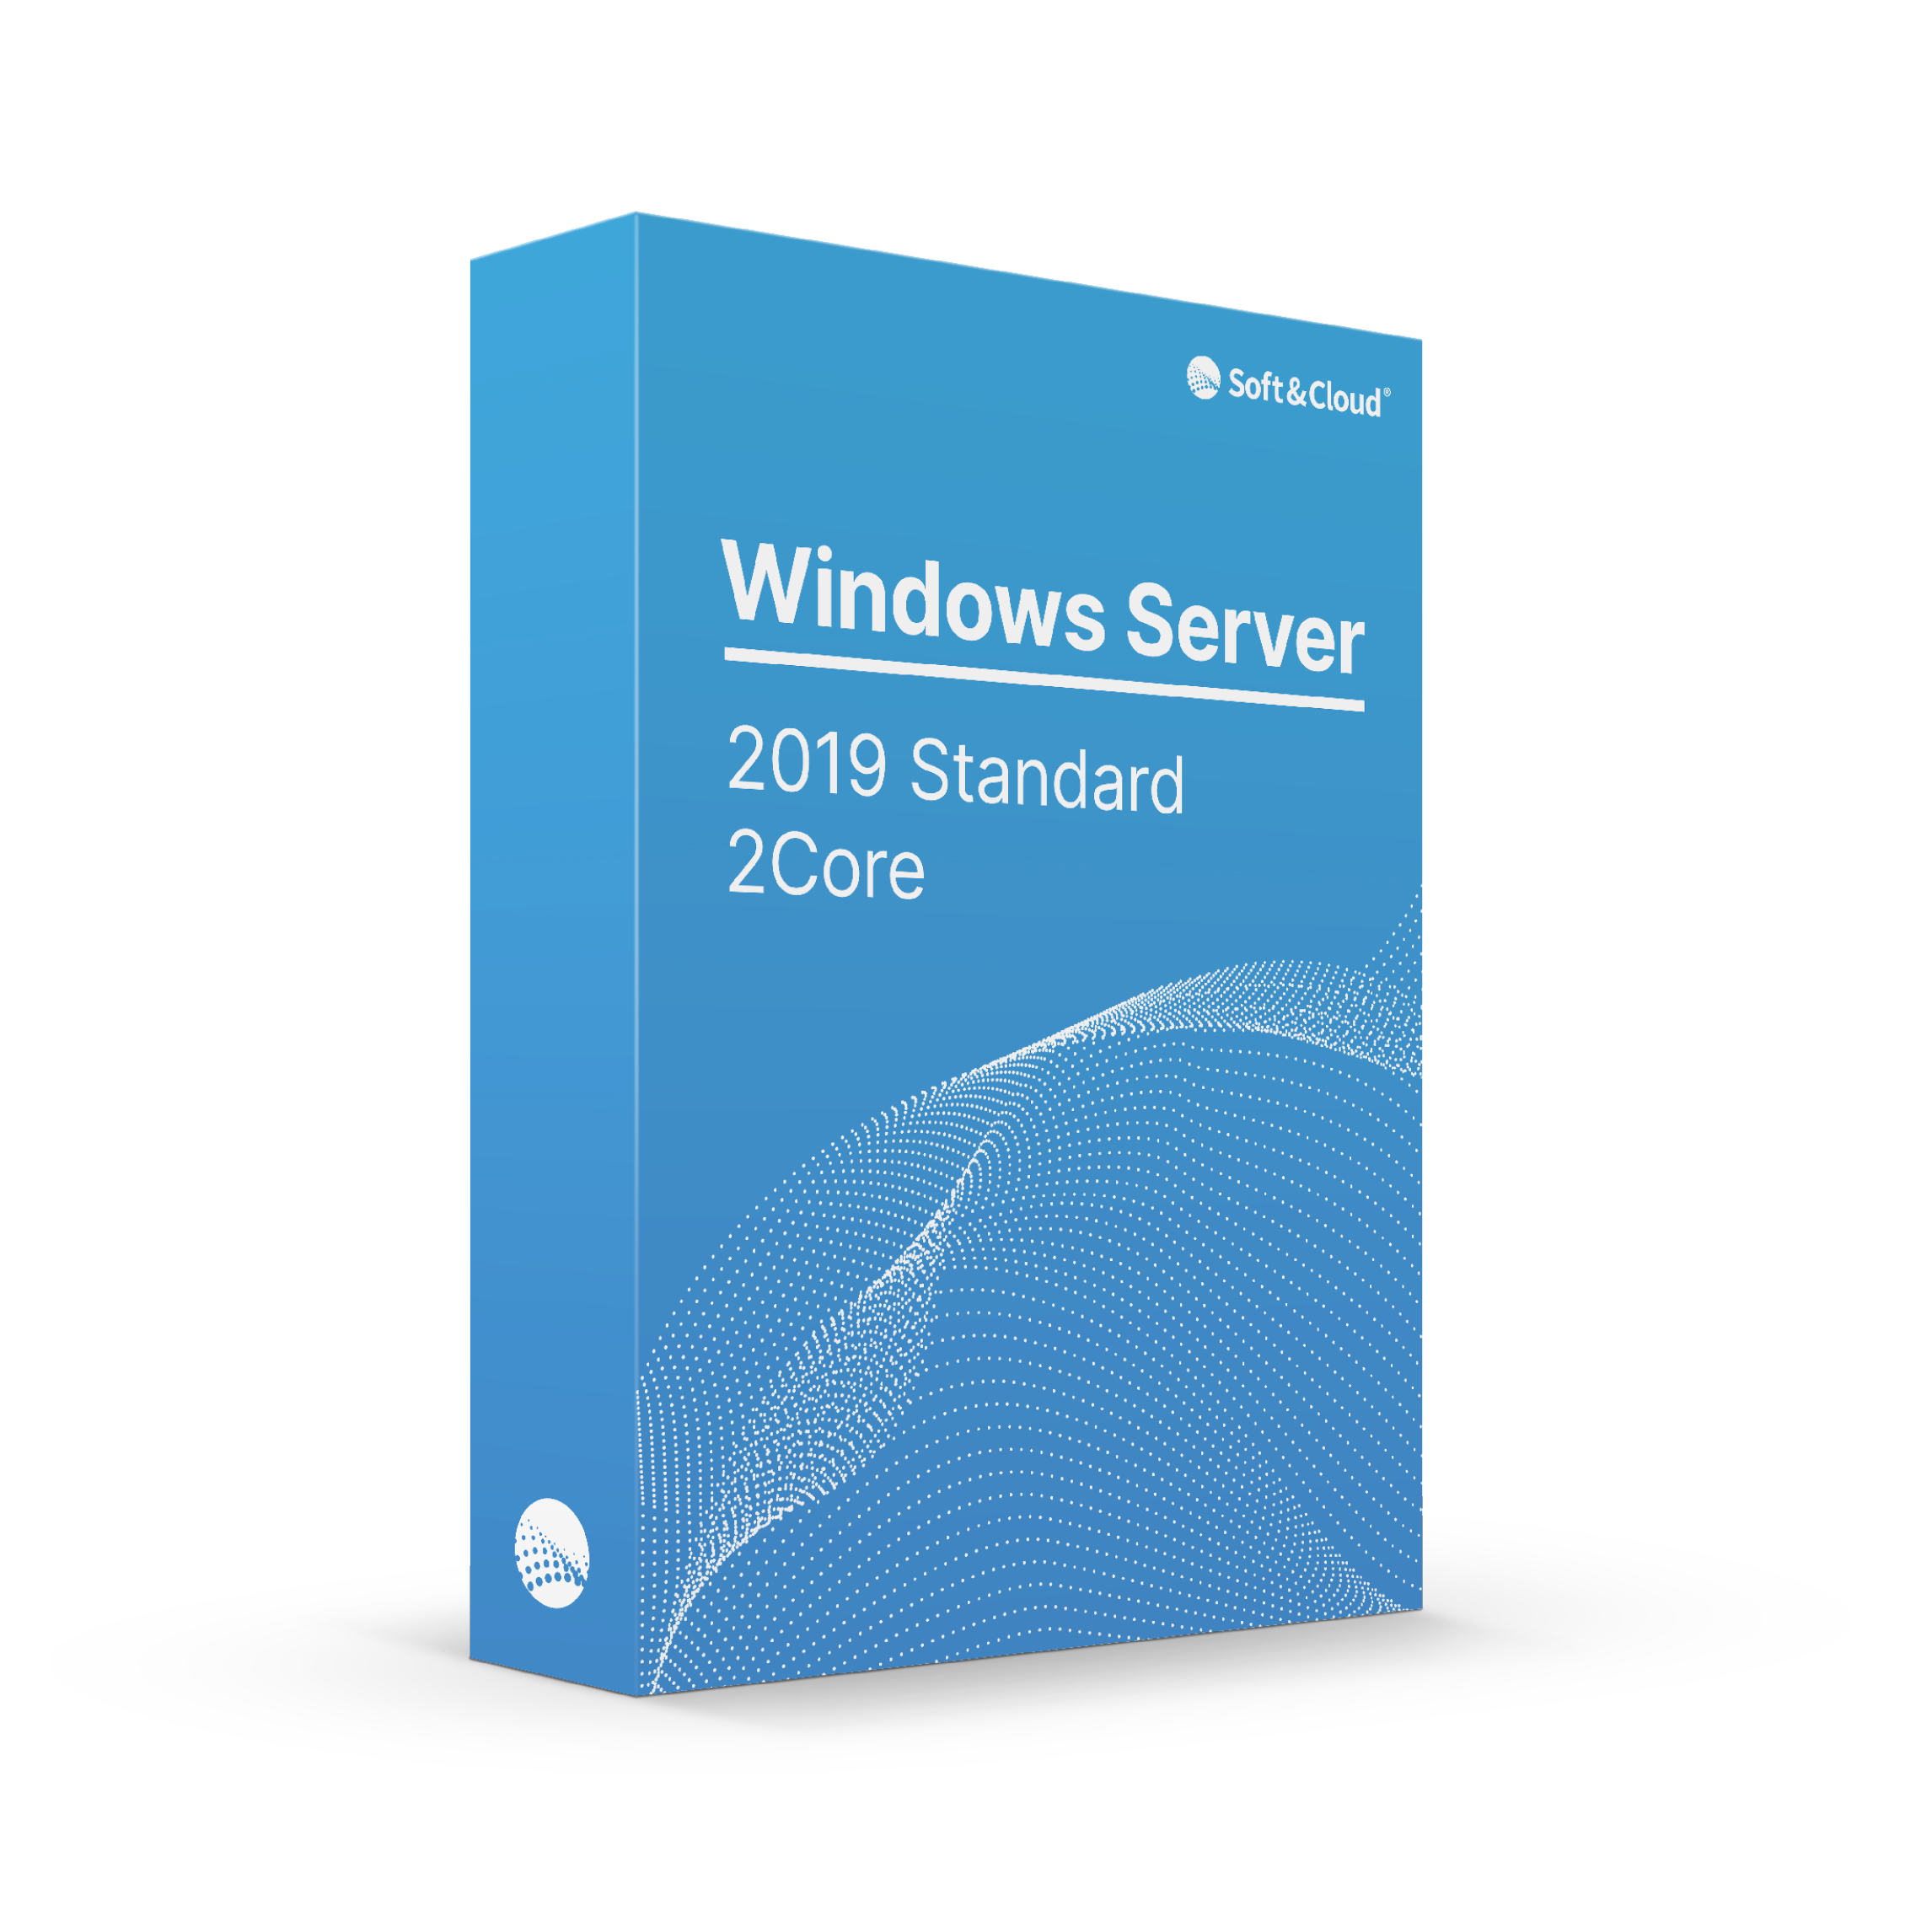 Windows Server 2019 Standard 2Core